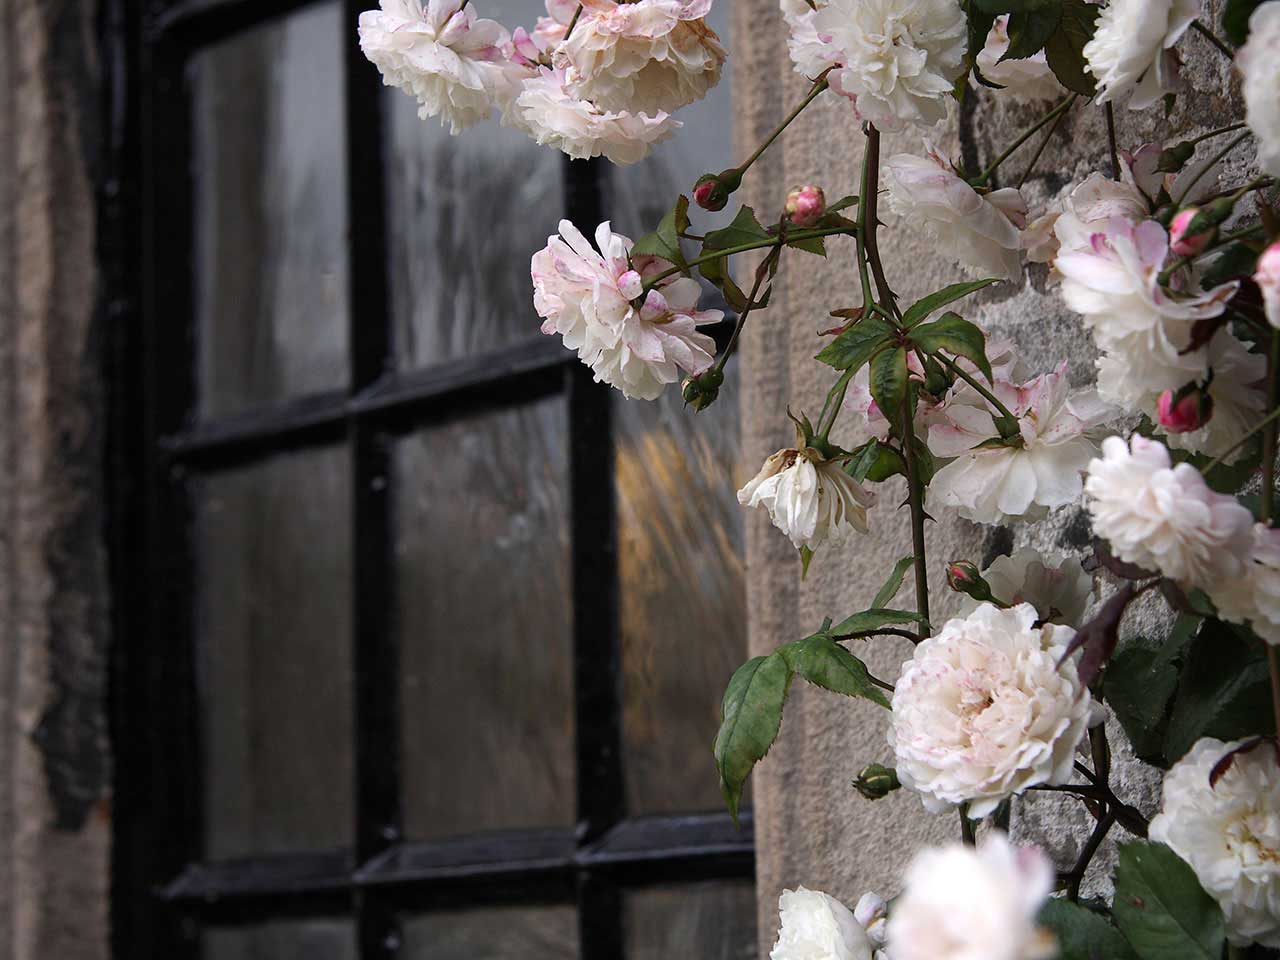 Rambling roses around a window